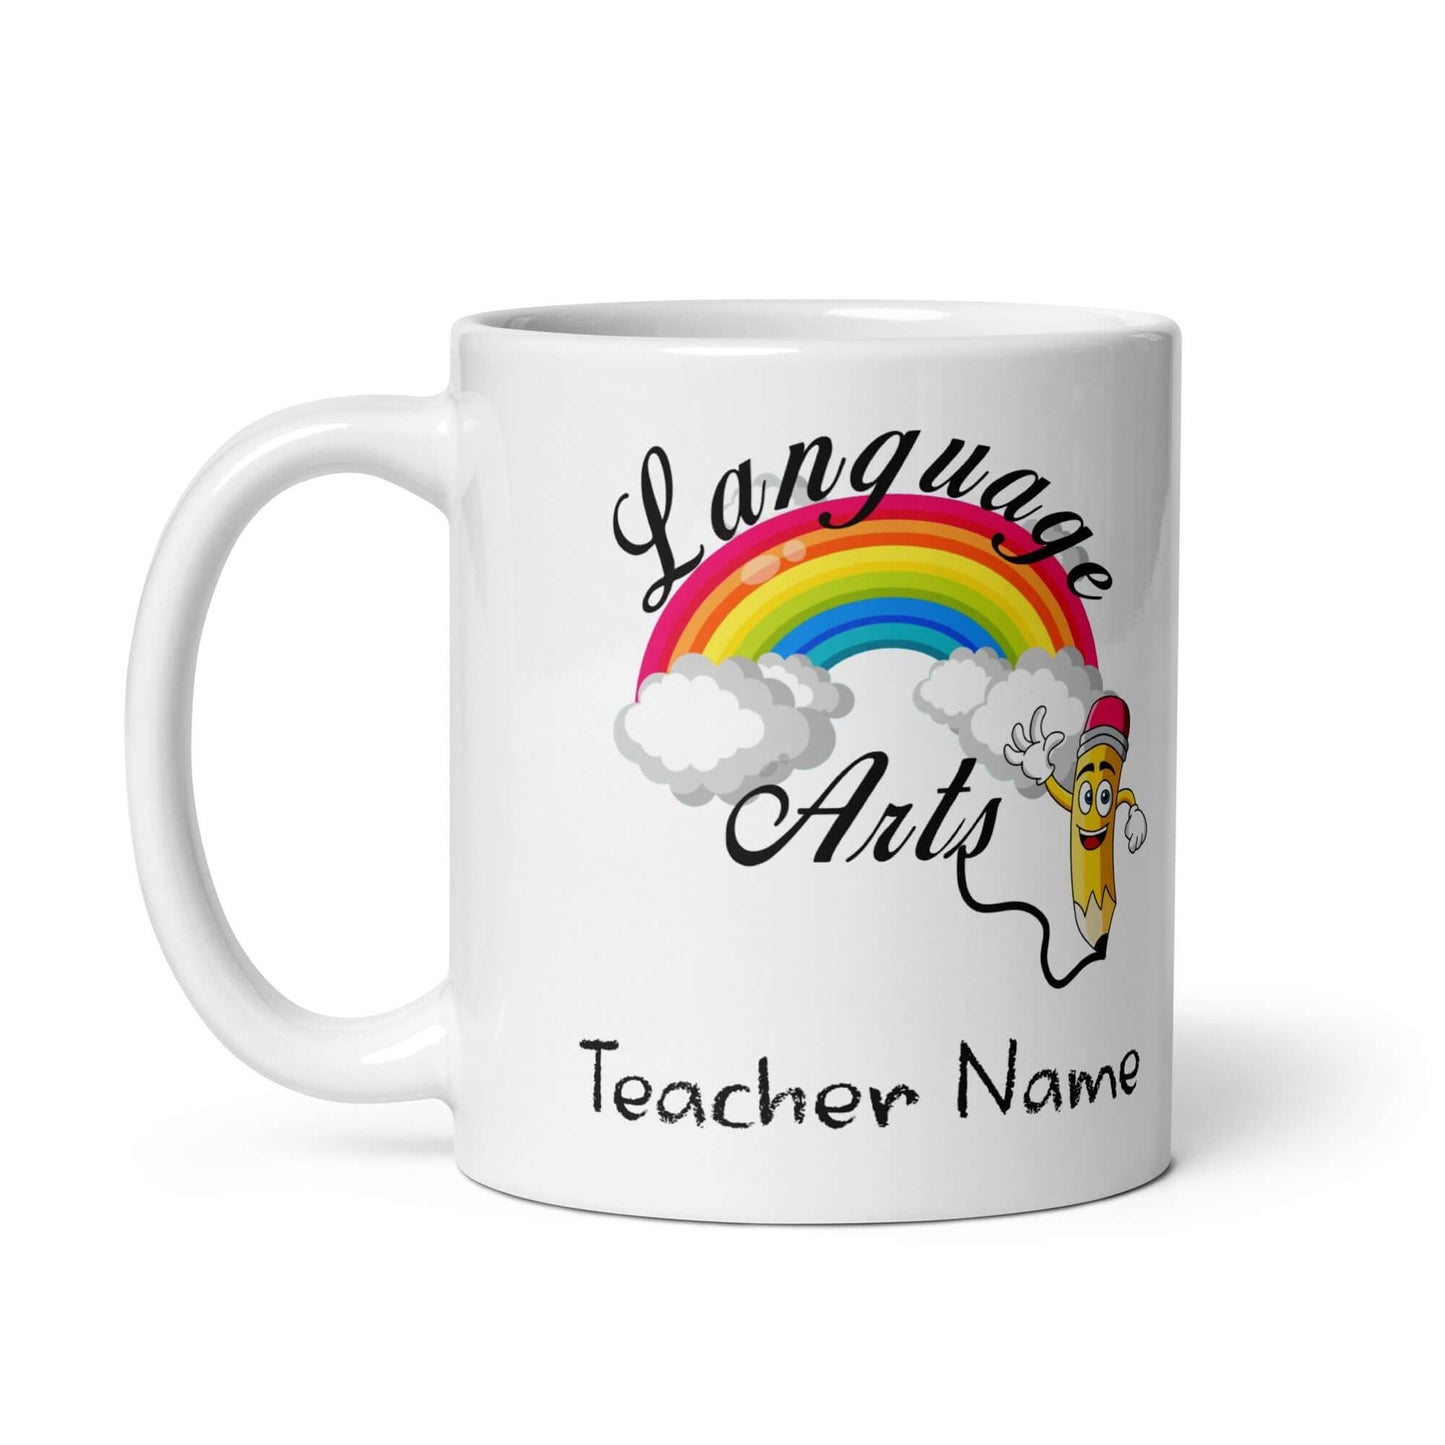 Language Arts Teacher - White glossy mug - Horrible Designs